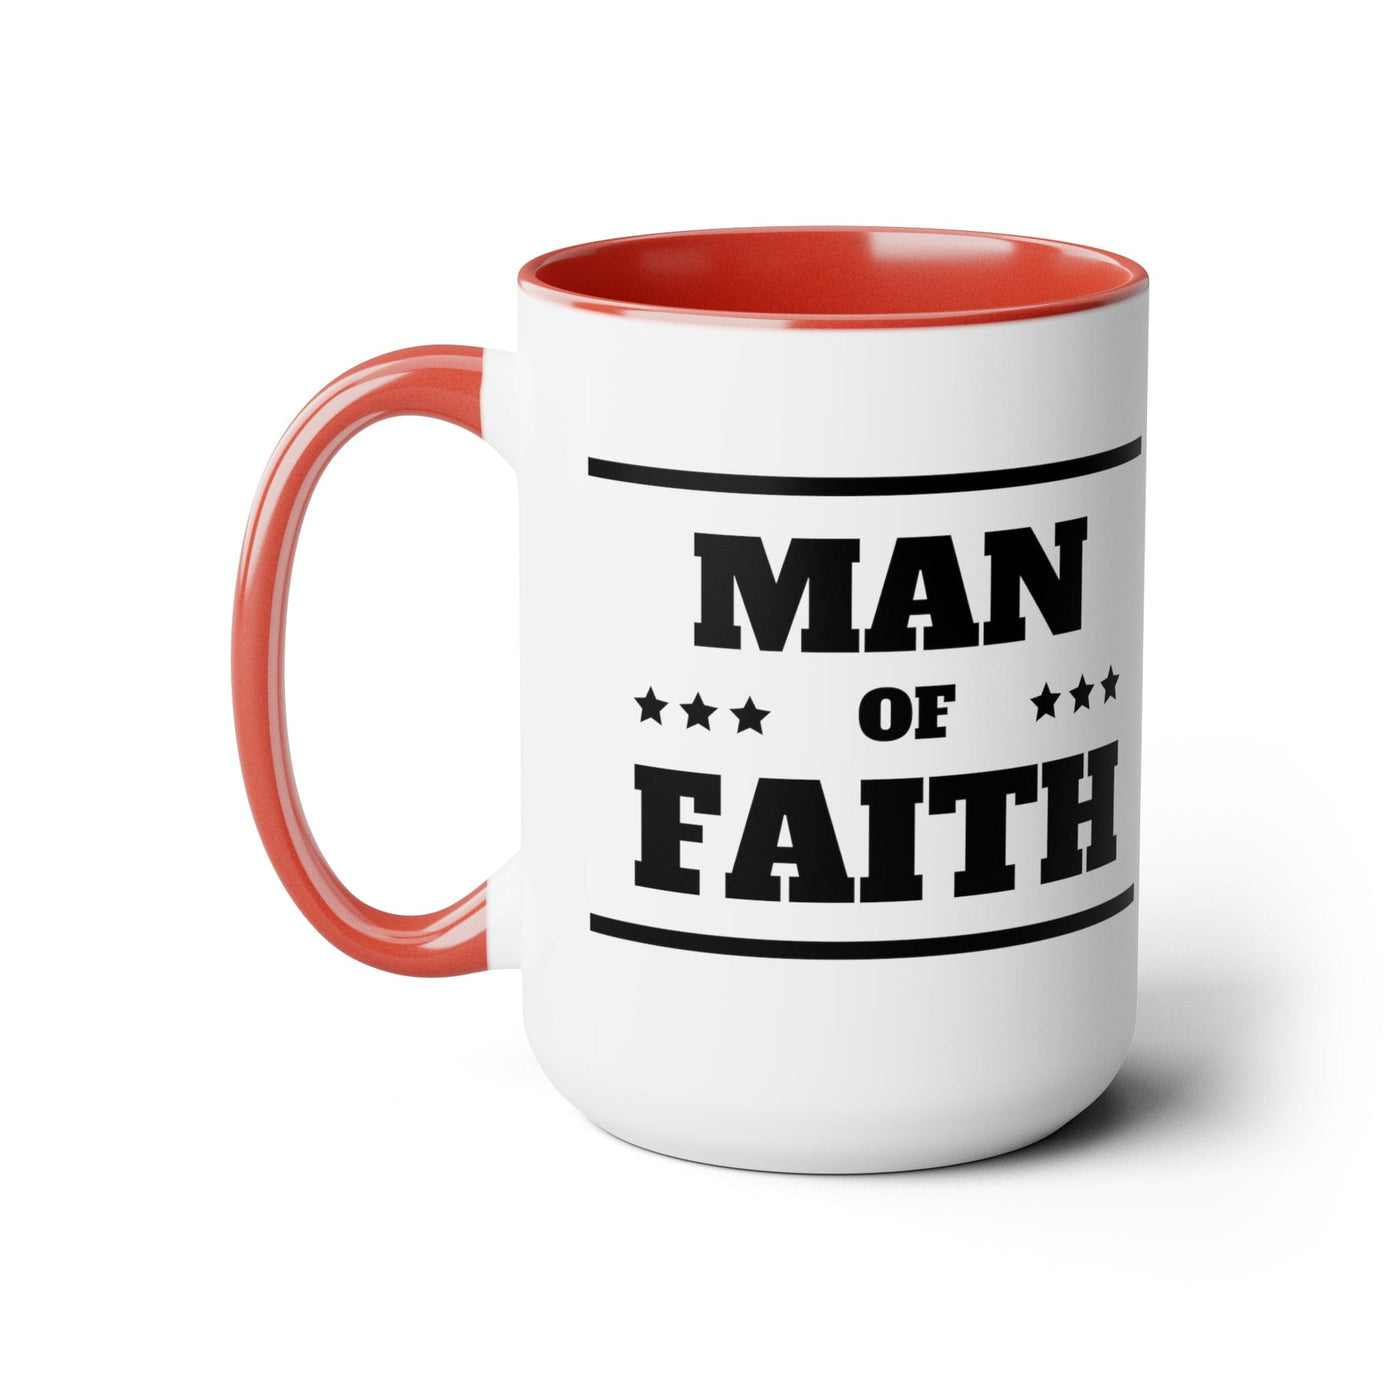 Accent Ceramic Coffee Mug 15oz - Man Of Faith Black Illustration - Decorative |